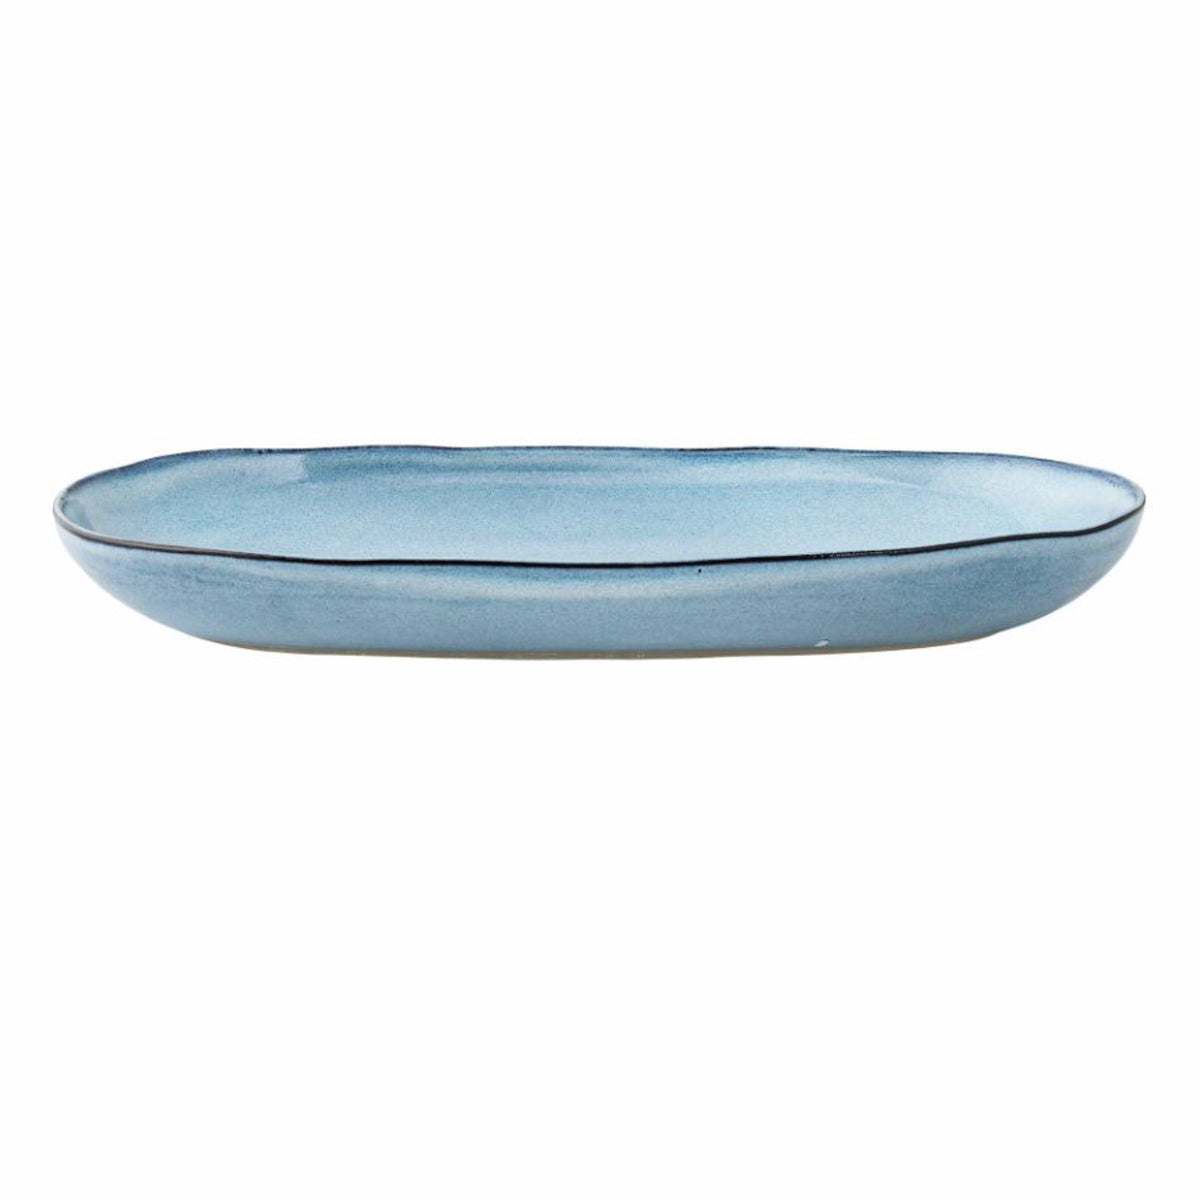 Bloomingville Sandrine Serving Plate, Blue, Stoneware